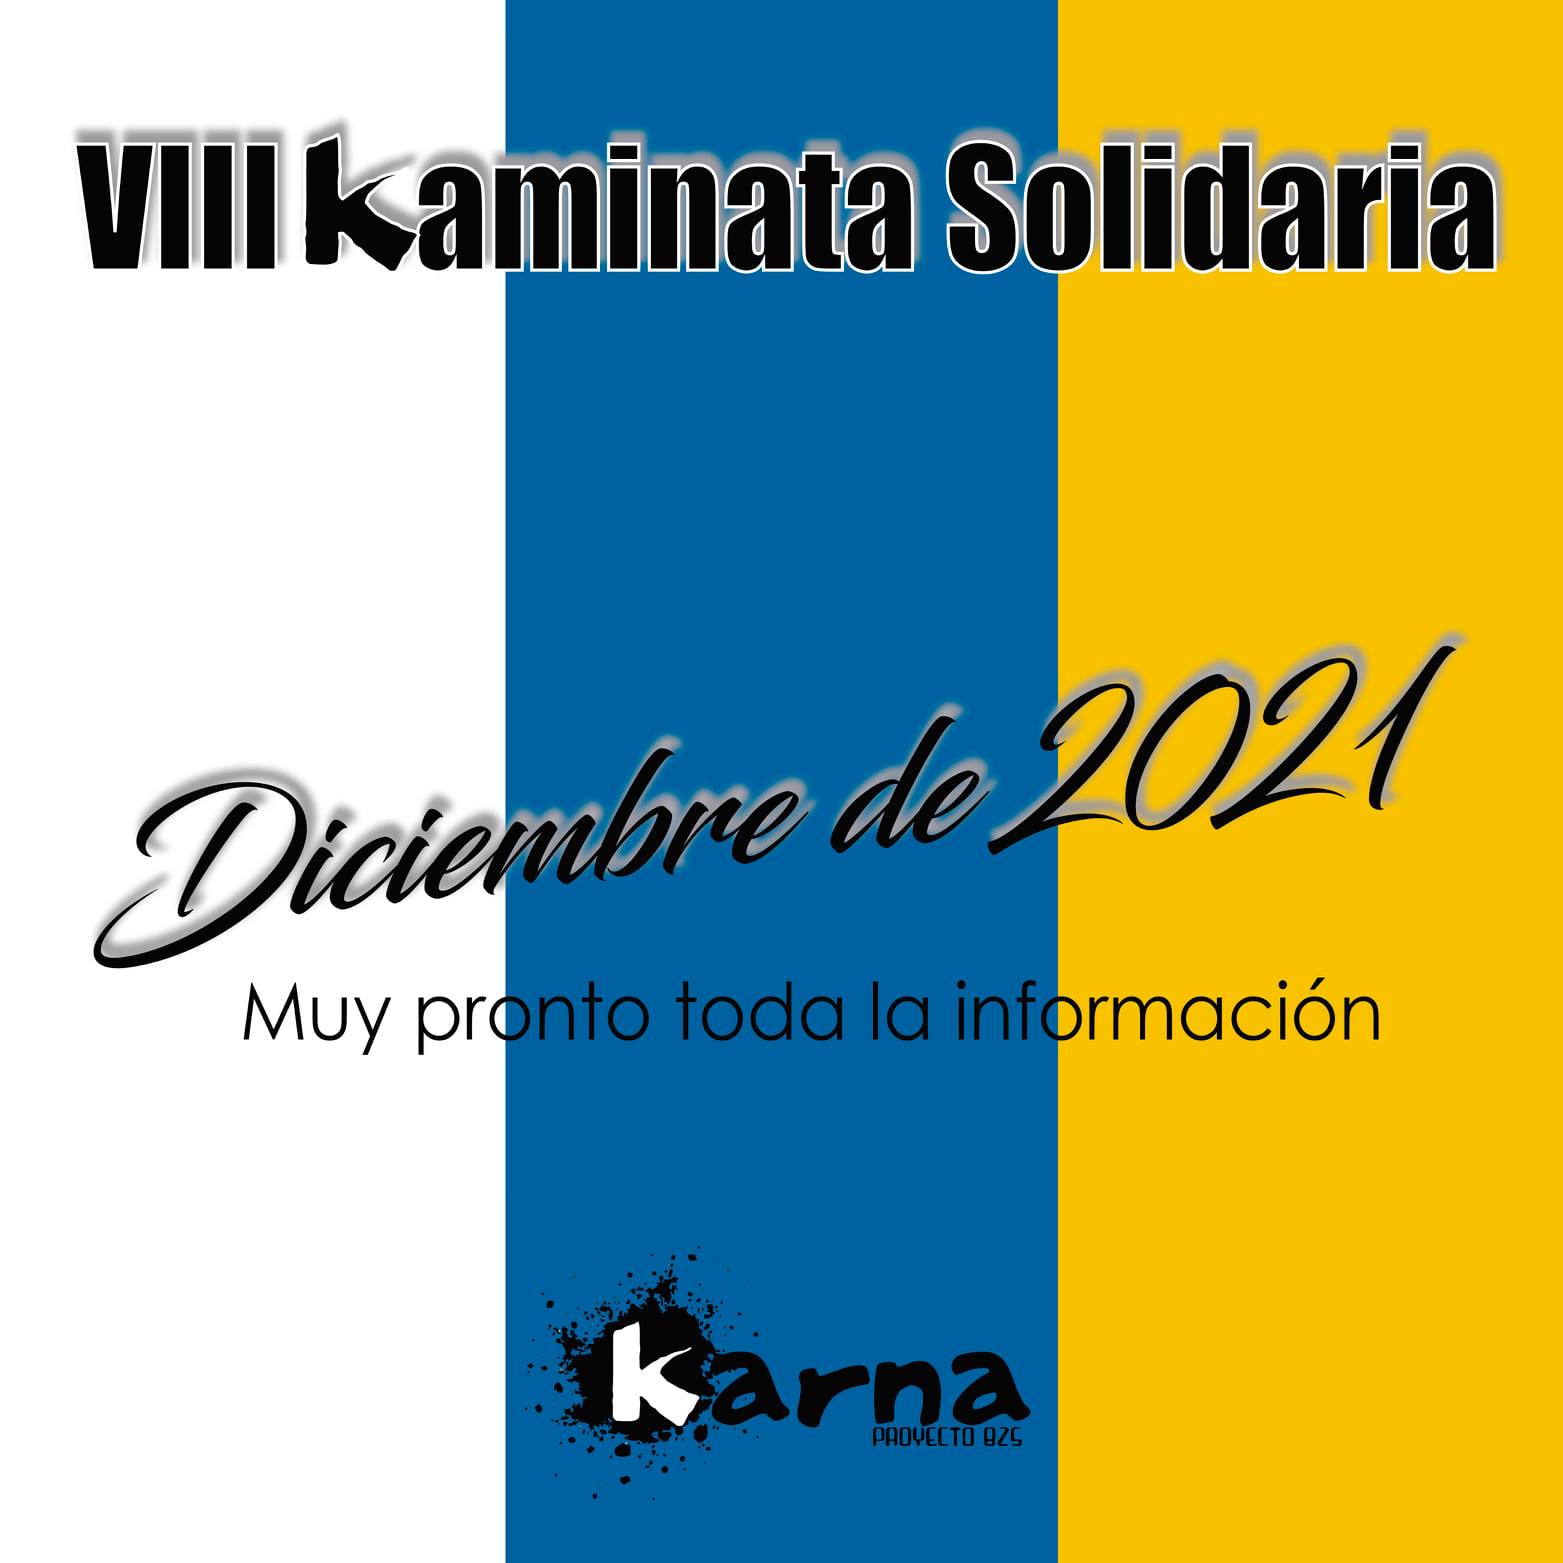 Logoptipo de KAMINATA SOLIDARIA - Karna somos diferentes